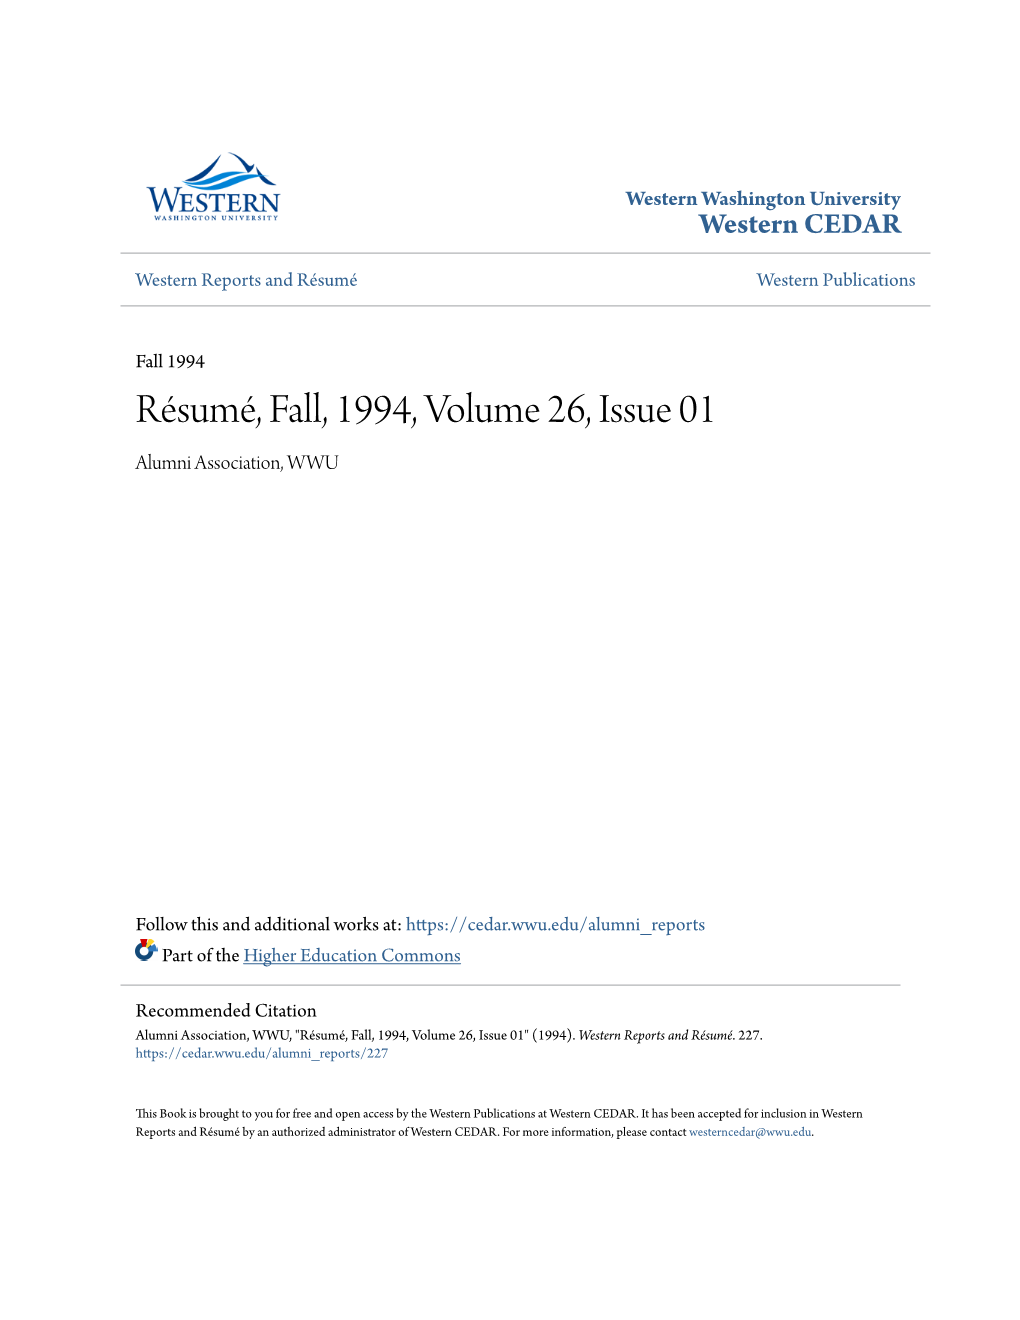 Résumé, Fall, 1994, Volume 26, Issue 01 Alumni Association, WWU